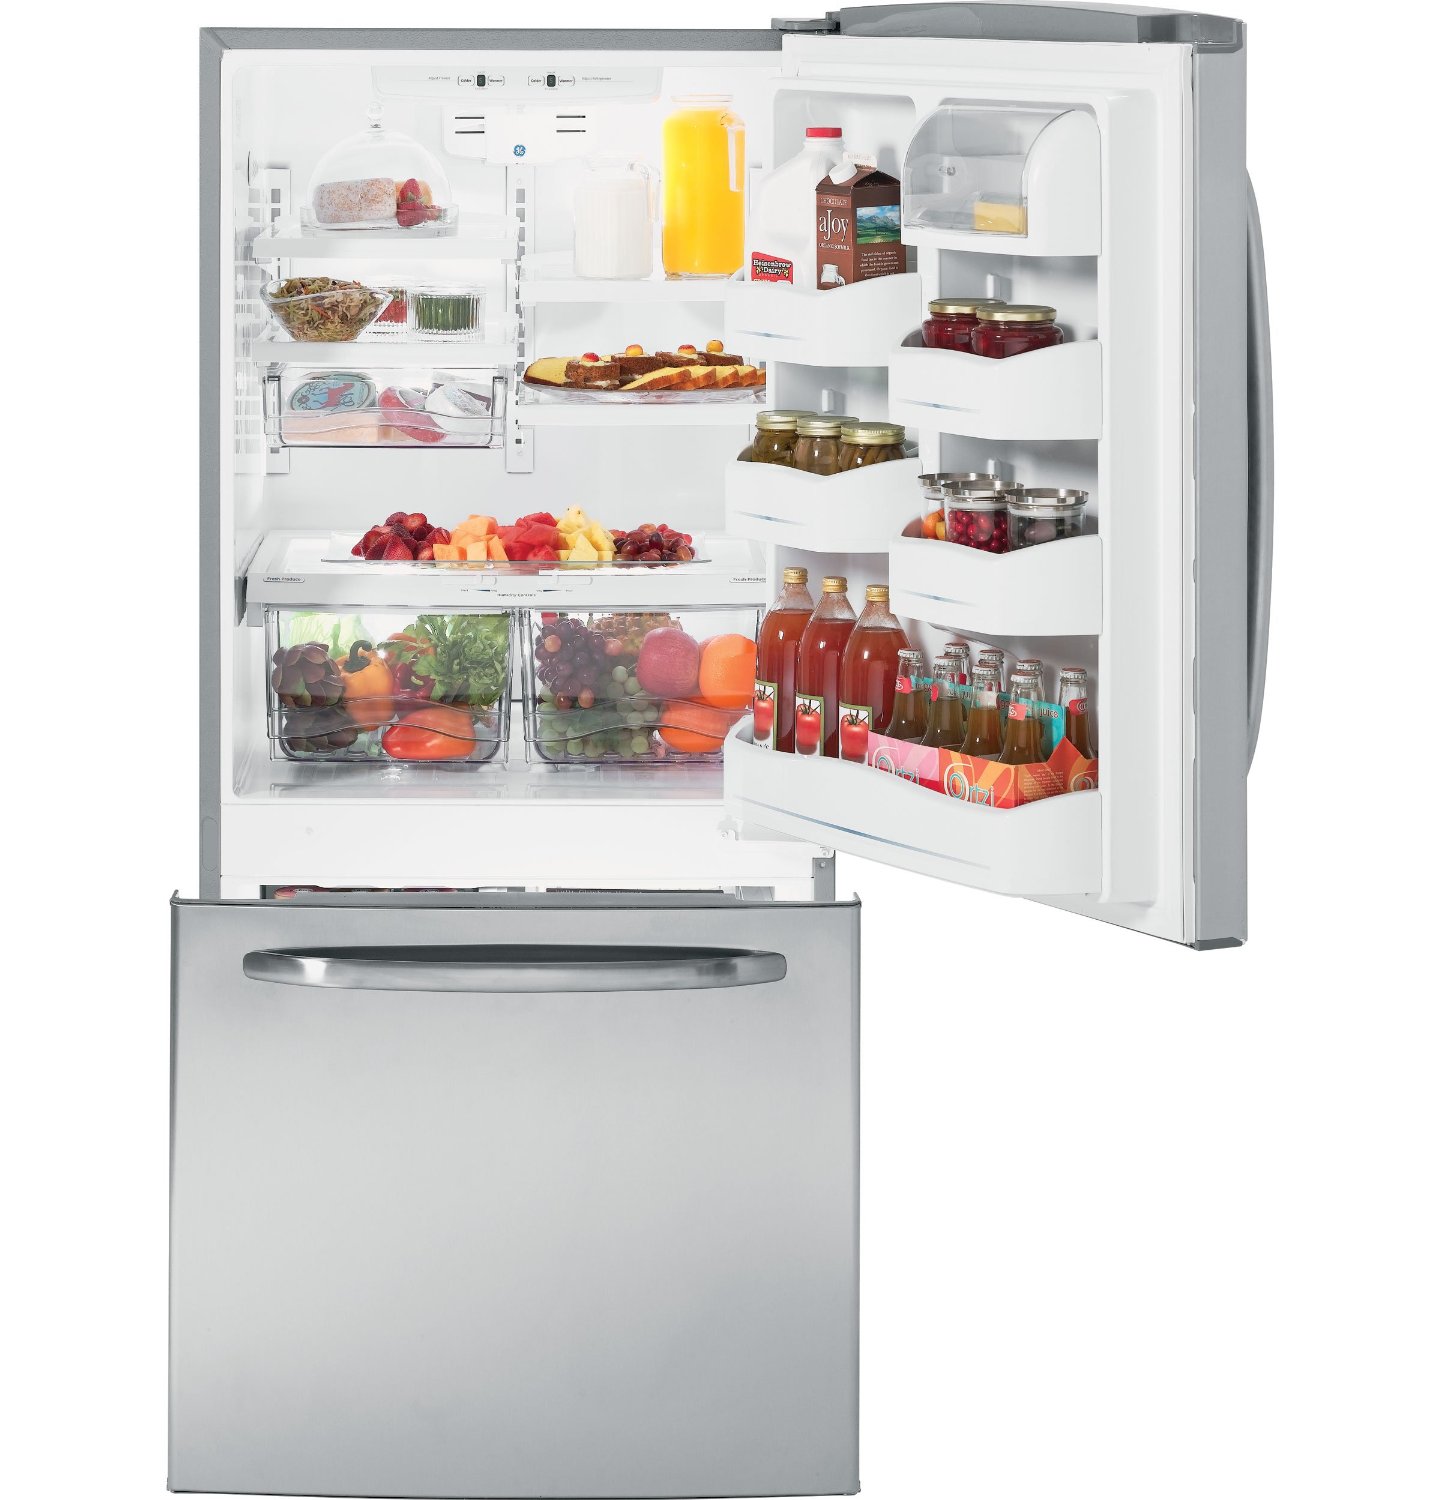 5 Best General Electric Refrigerator Tool Box 2019 2020